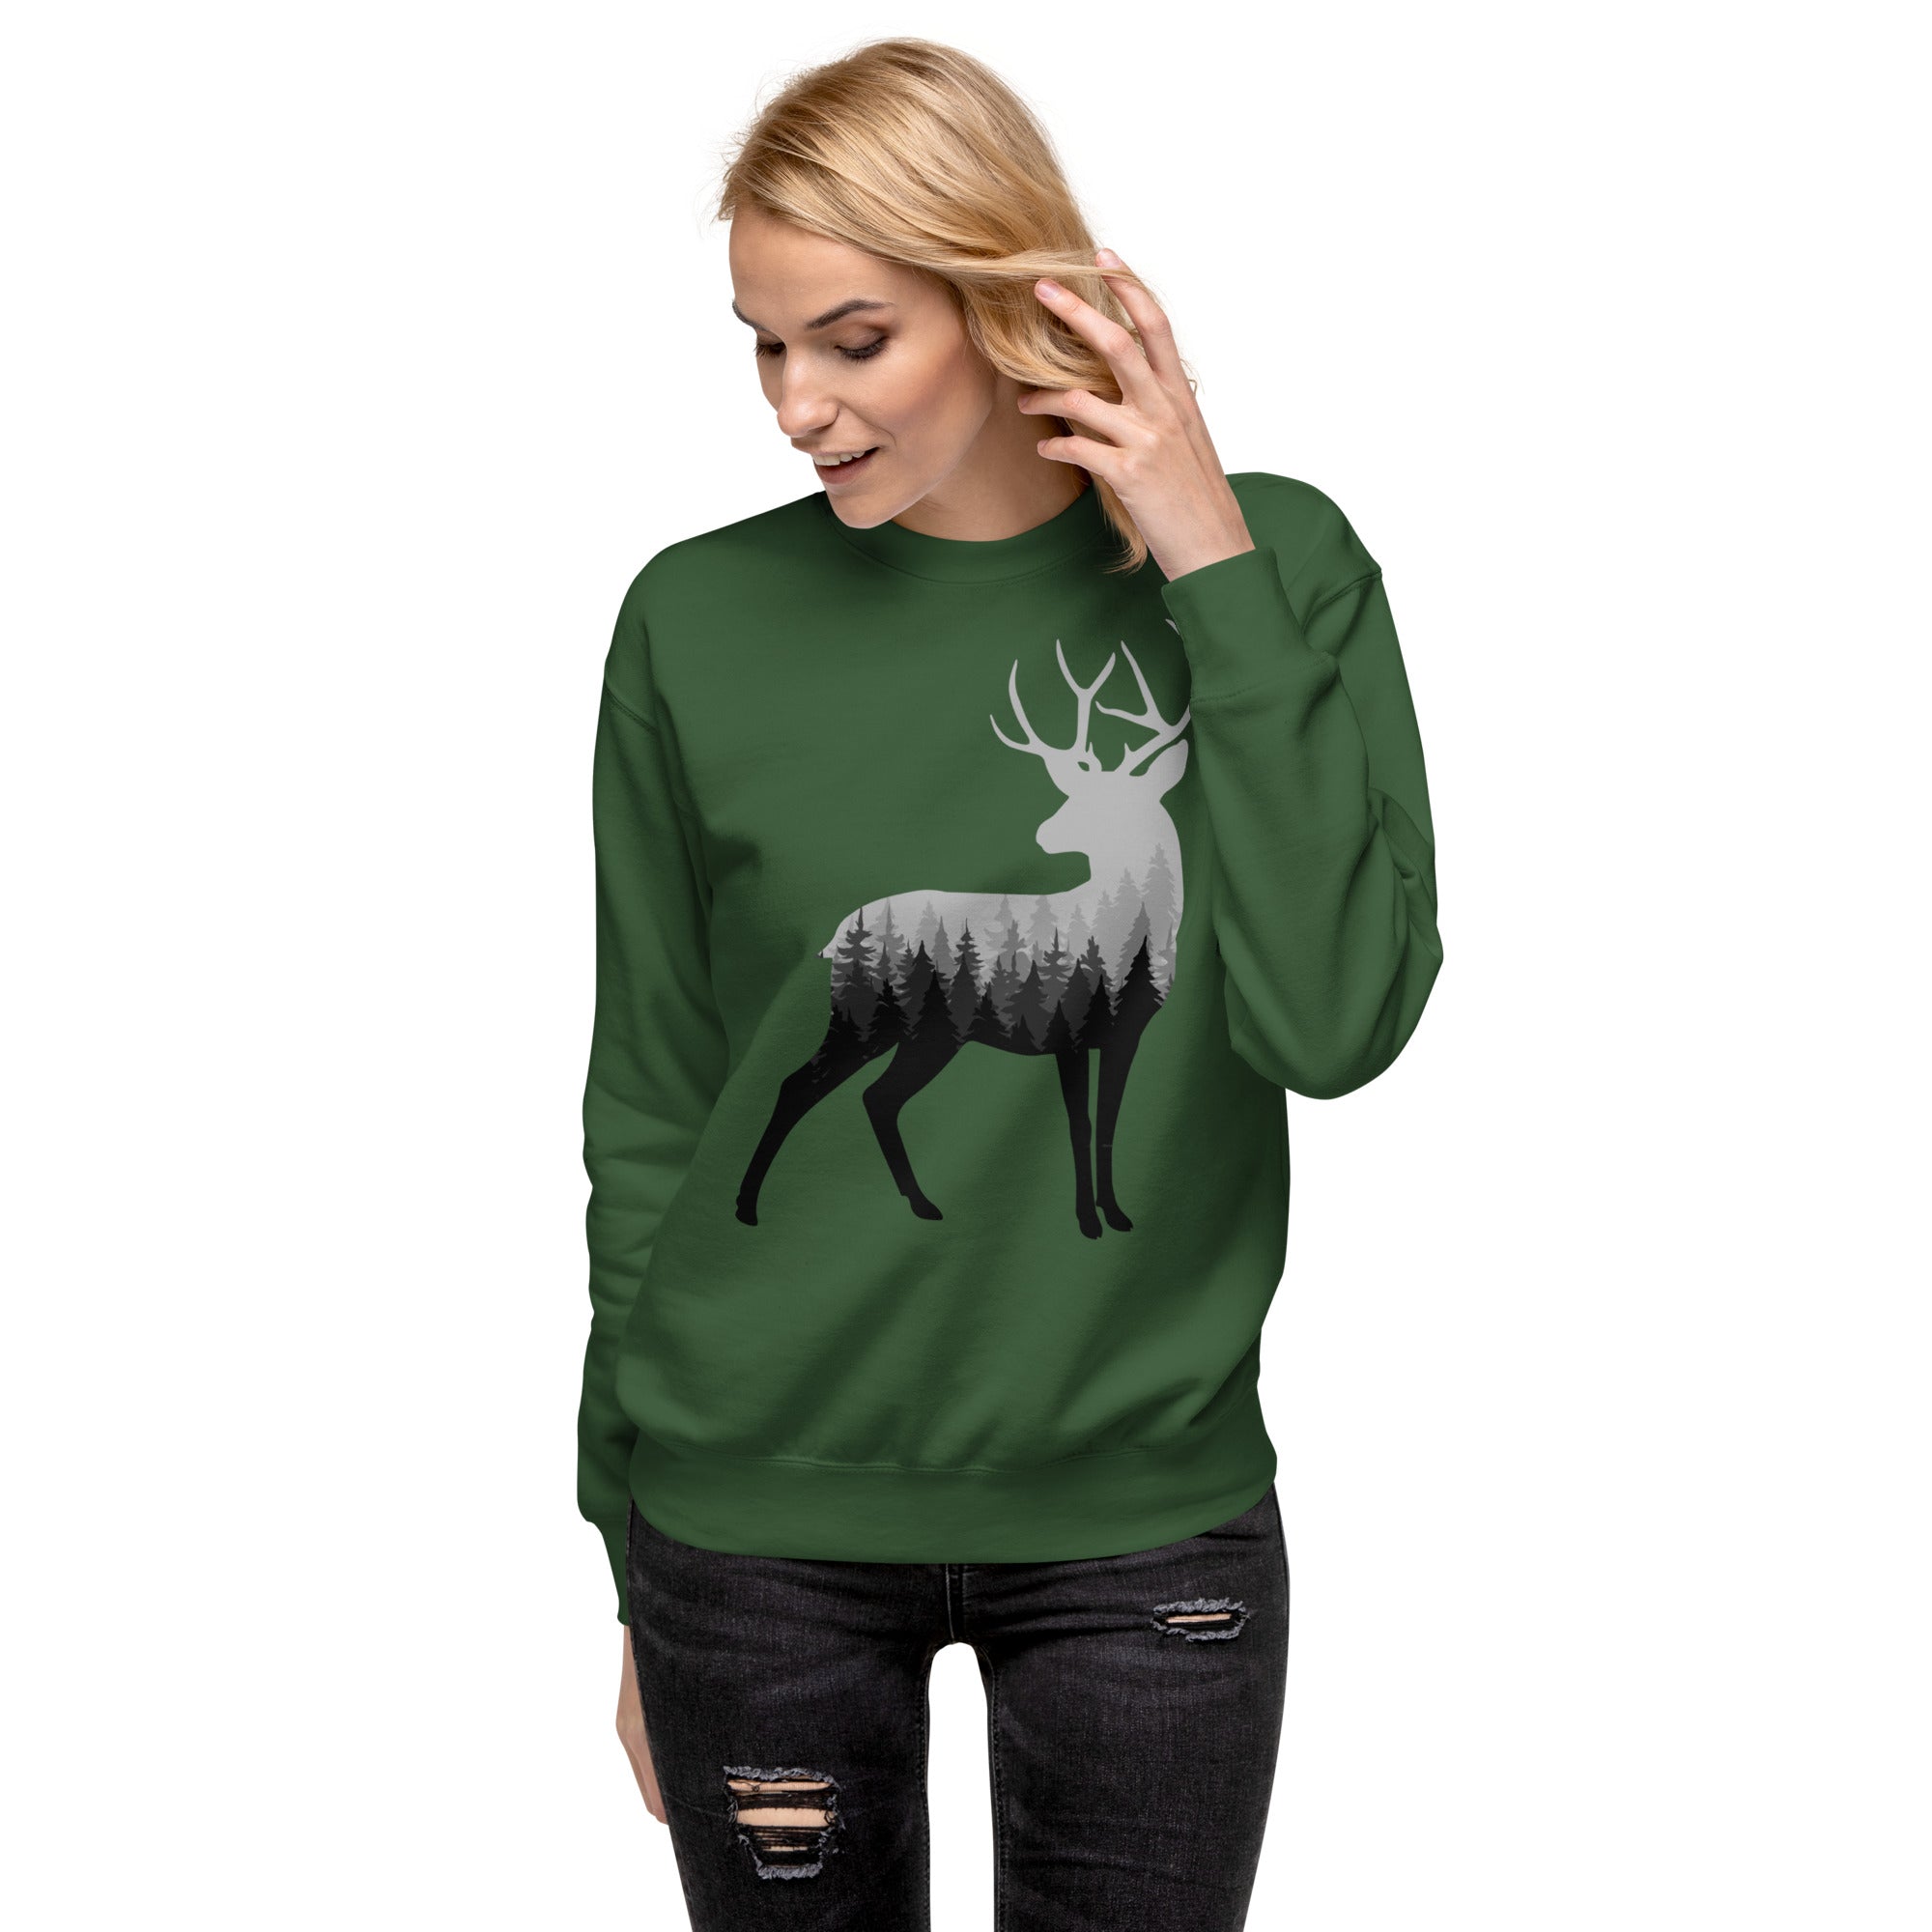 Buck n' Trees Women's Premium Sweatshirt